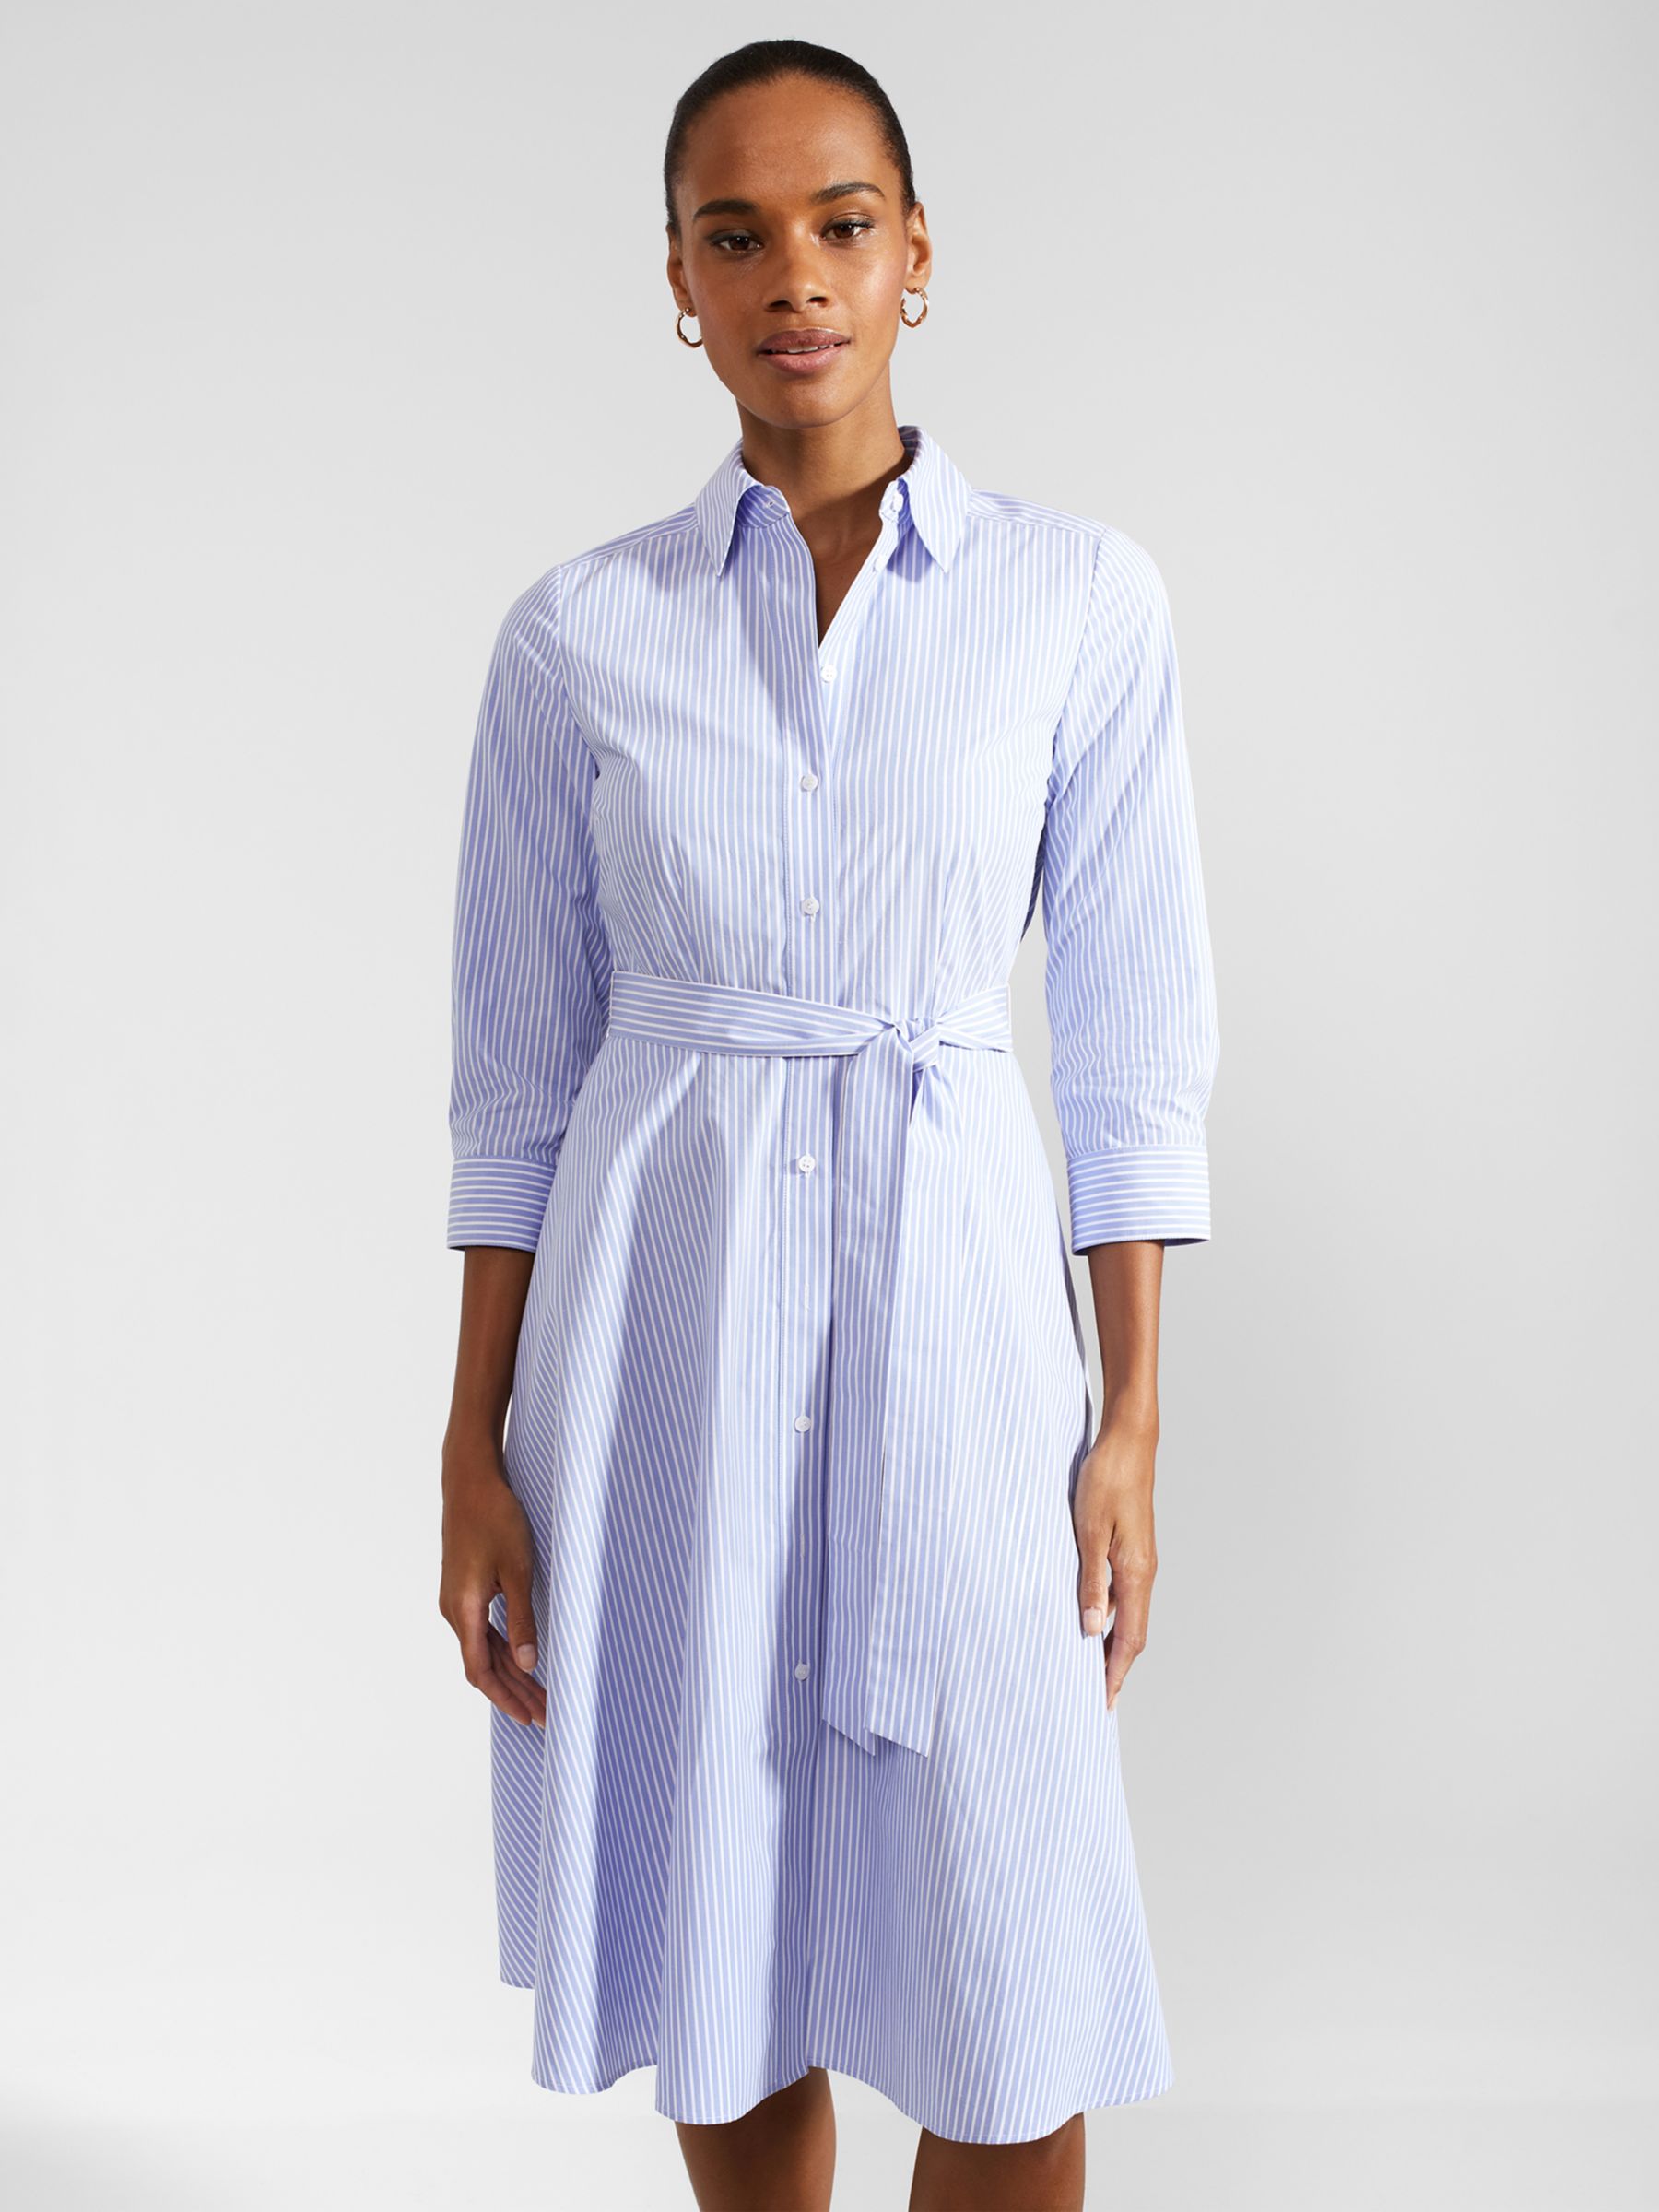 Hobbs Harlow Cotton Knee Length Shirt Dress, Blue/Ivory, 10